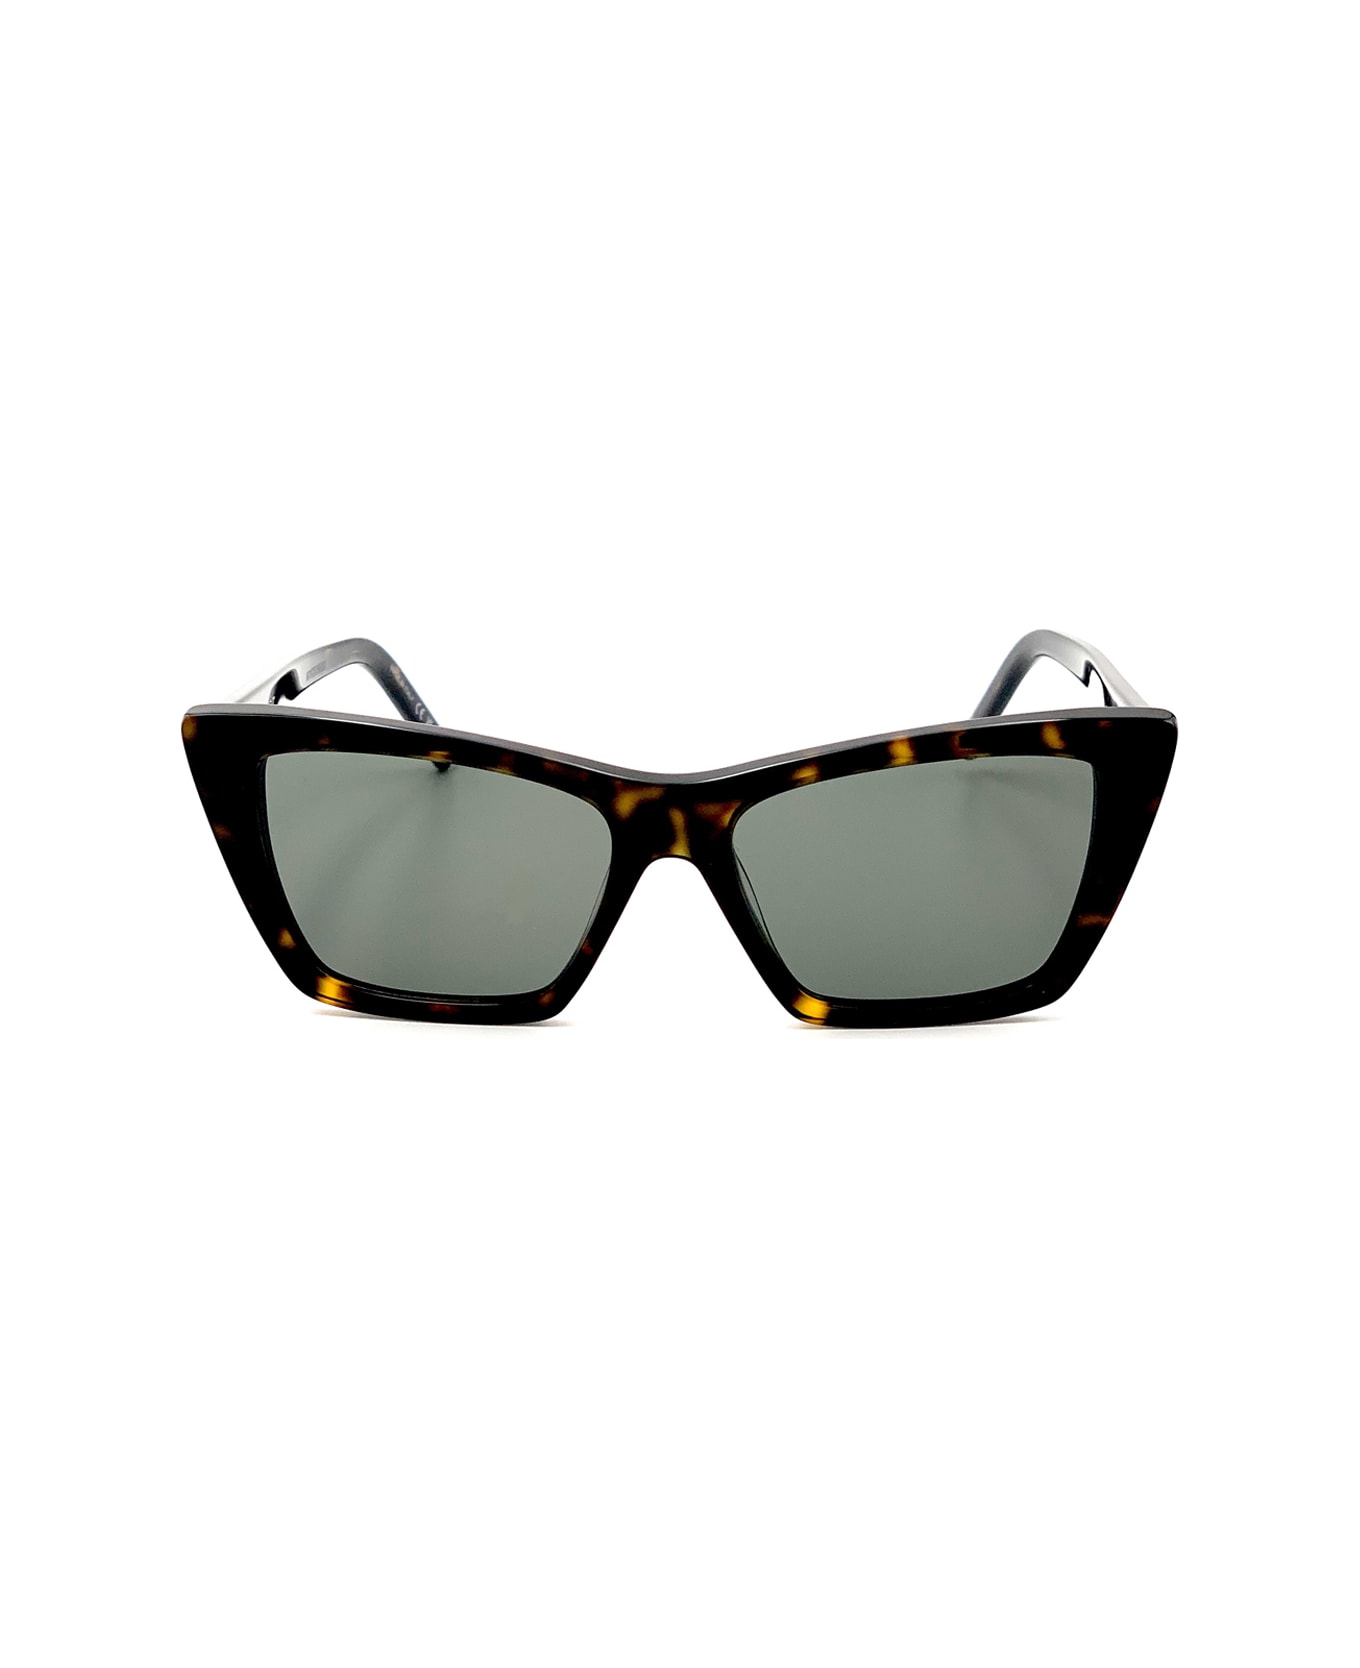 Saint Laurent Eyewear Sl276 Mica Sunglasses - Marrone